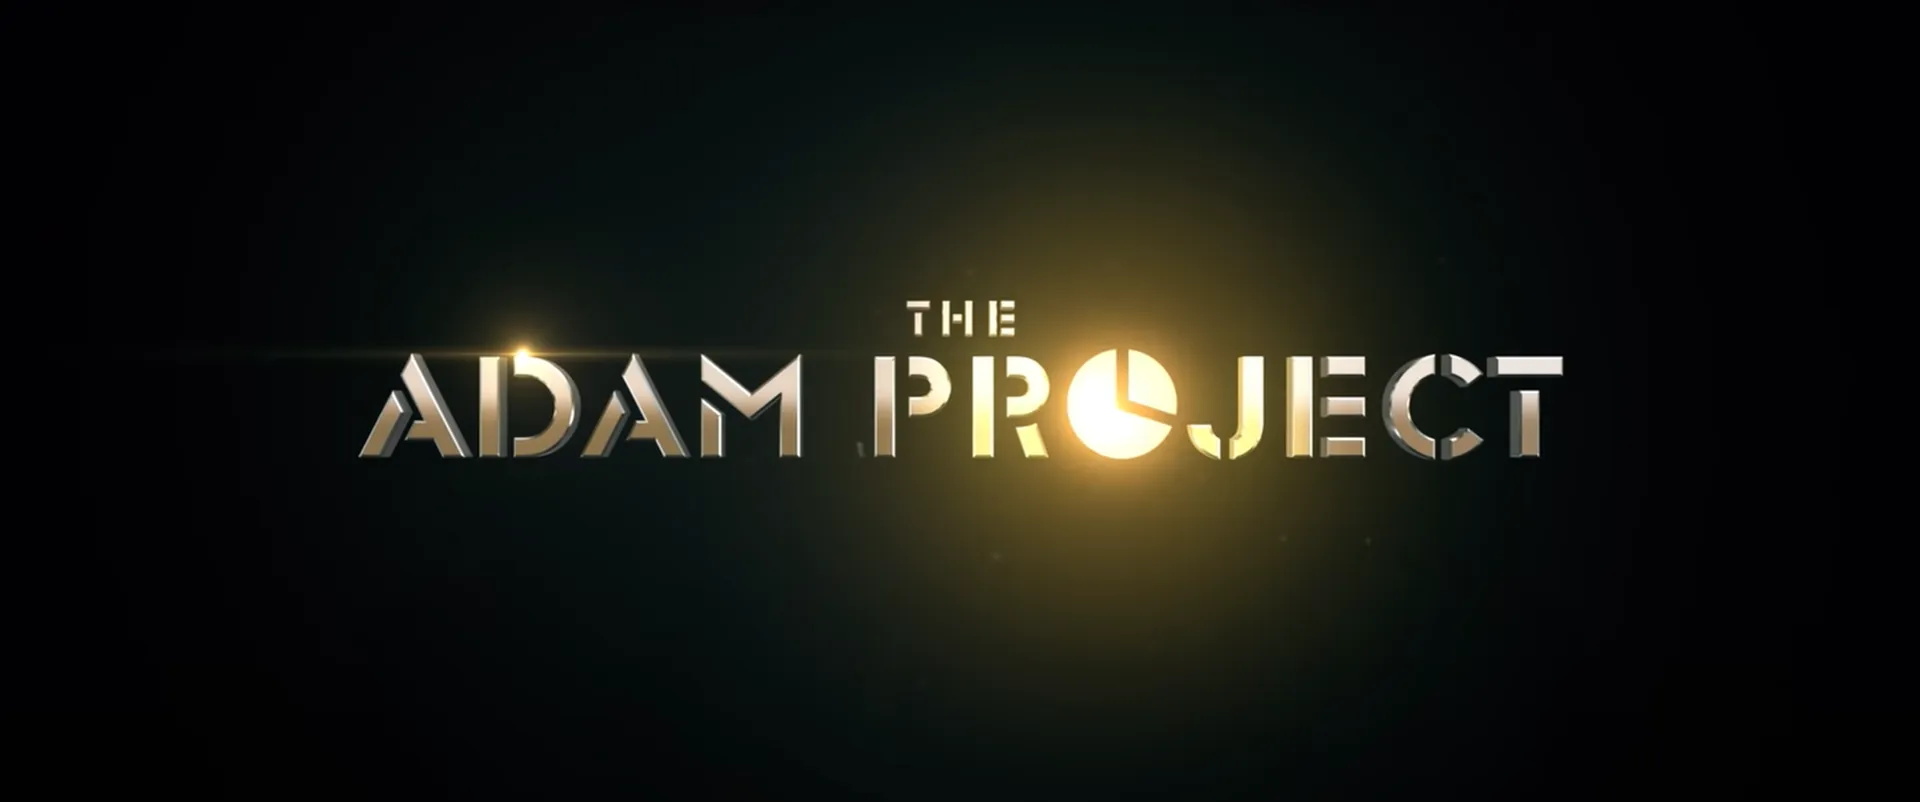 The Adam Project Wallpaper